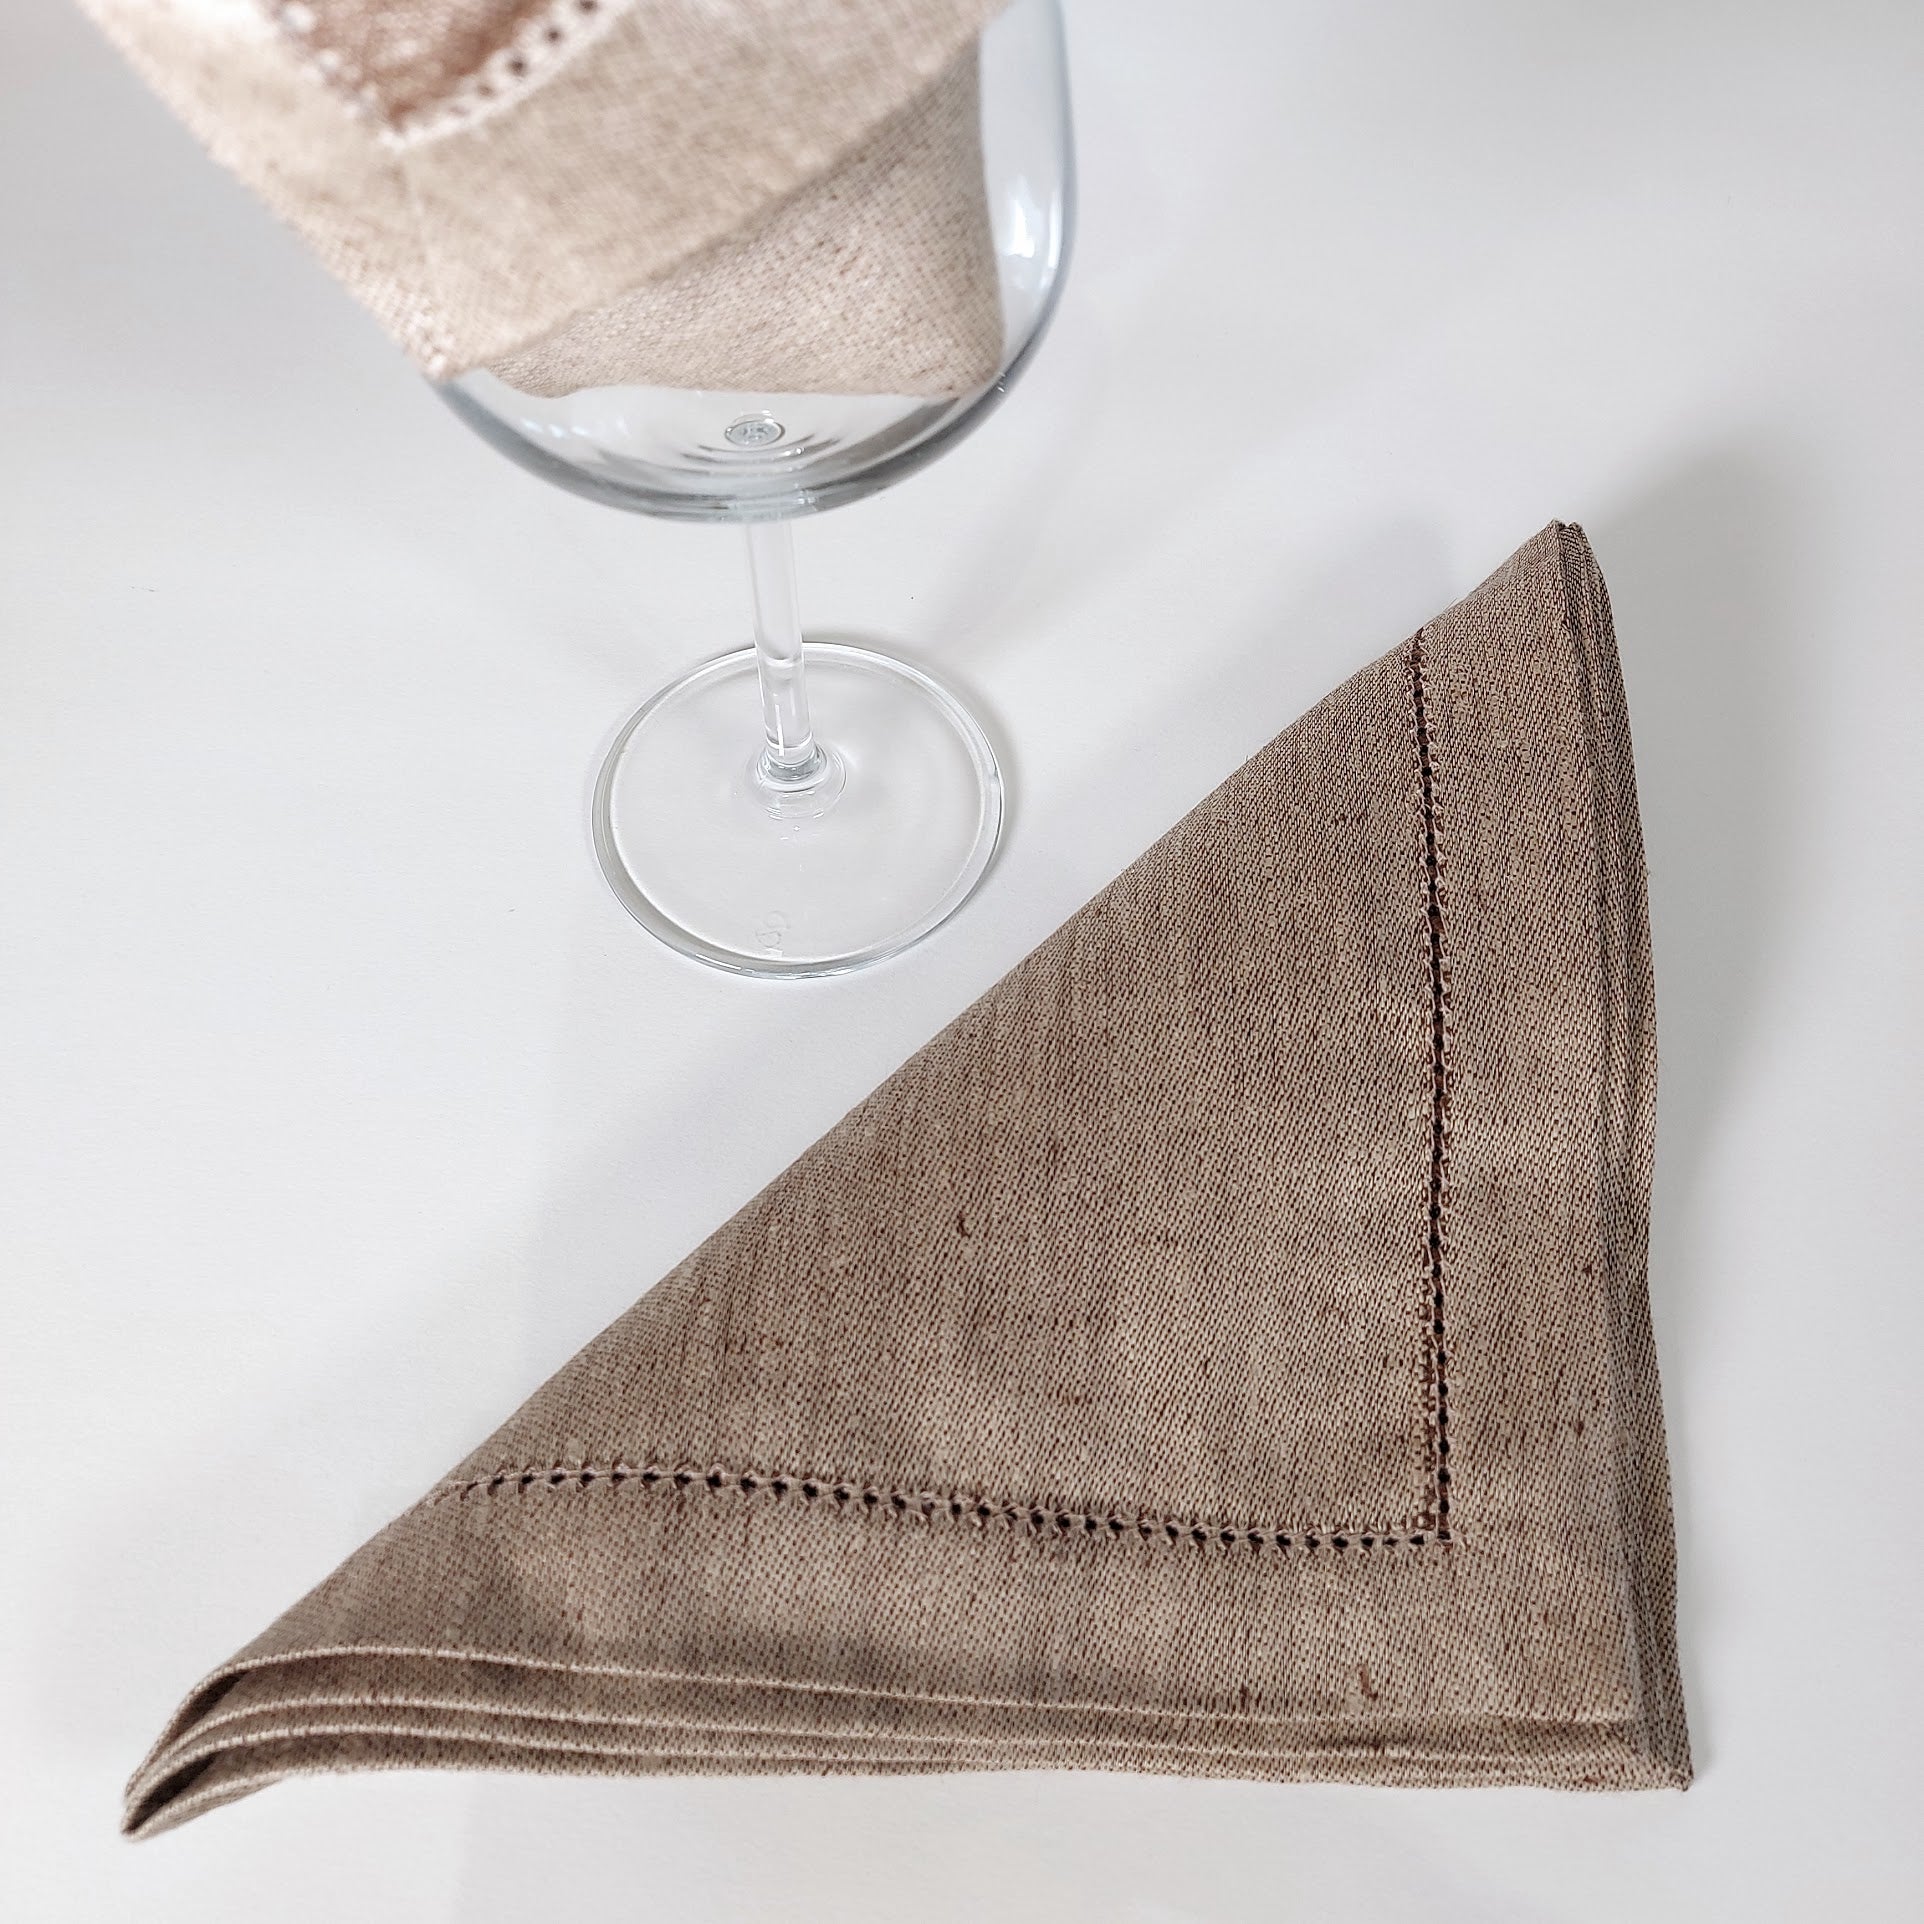 Casale jacquard linen napkin with hemstitch